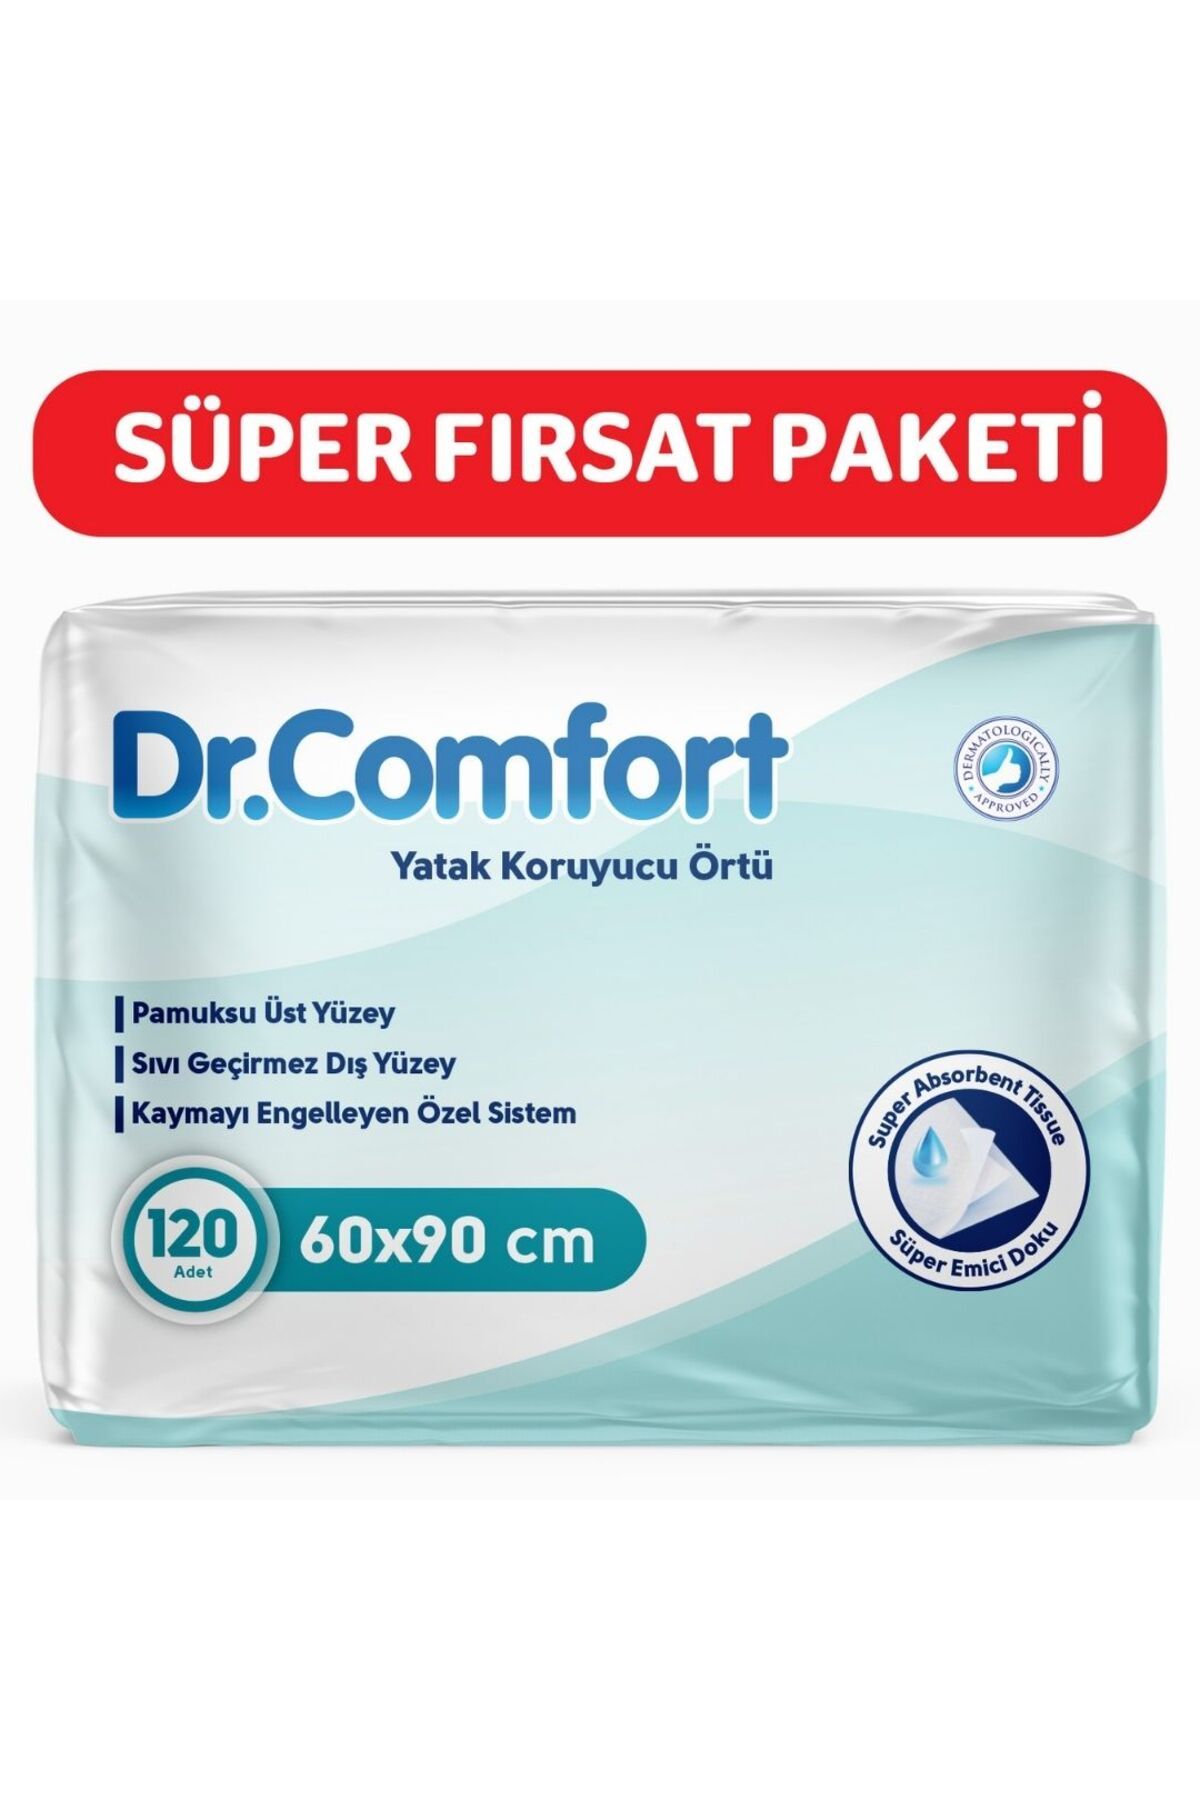 Dr.Comfort Dr Comfort 60x90 Yatak Koruyucu Örtü 120 Adet